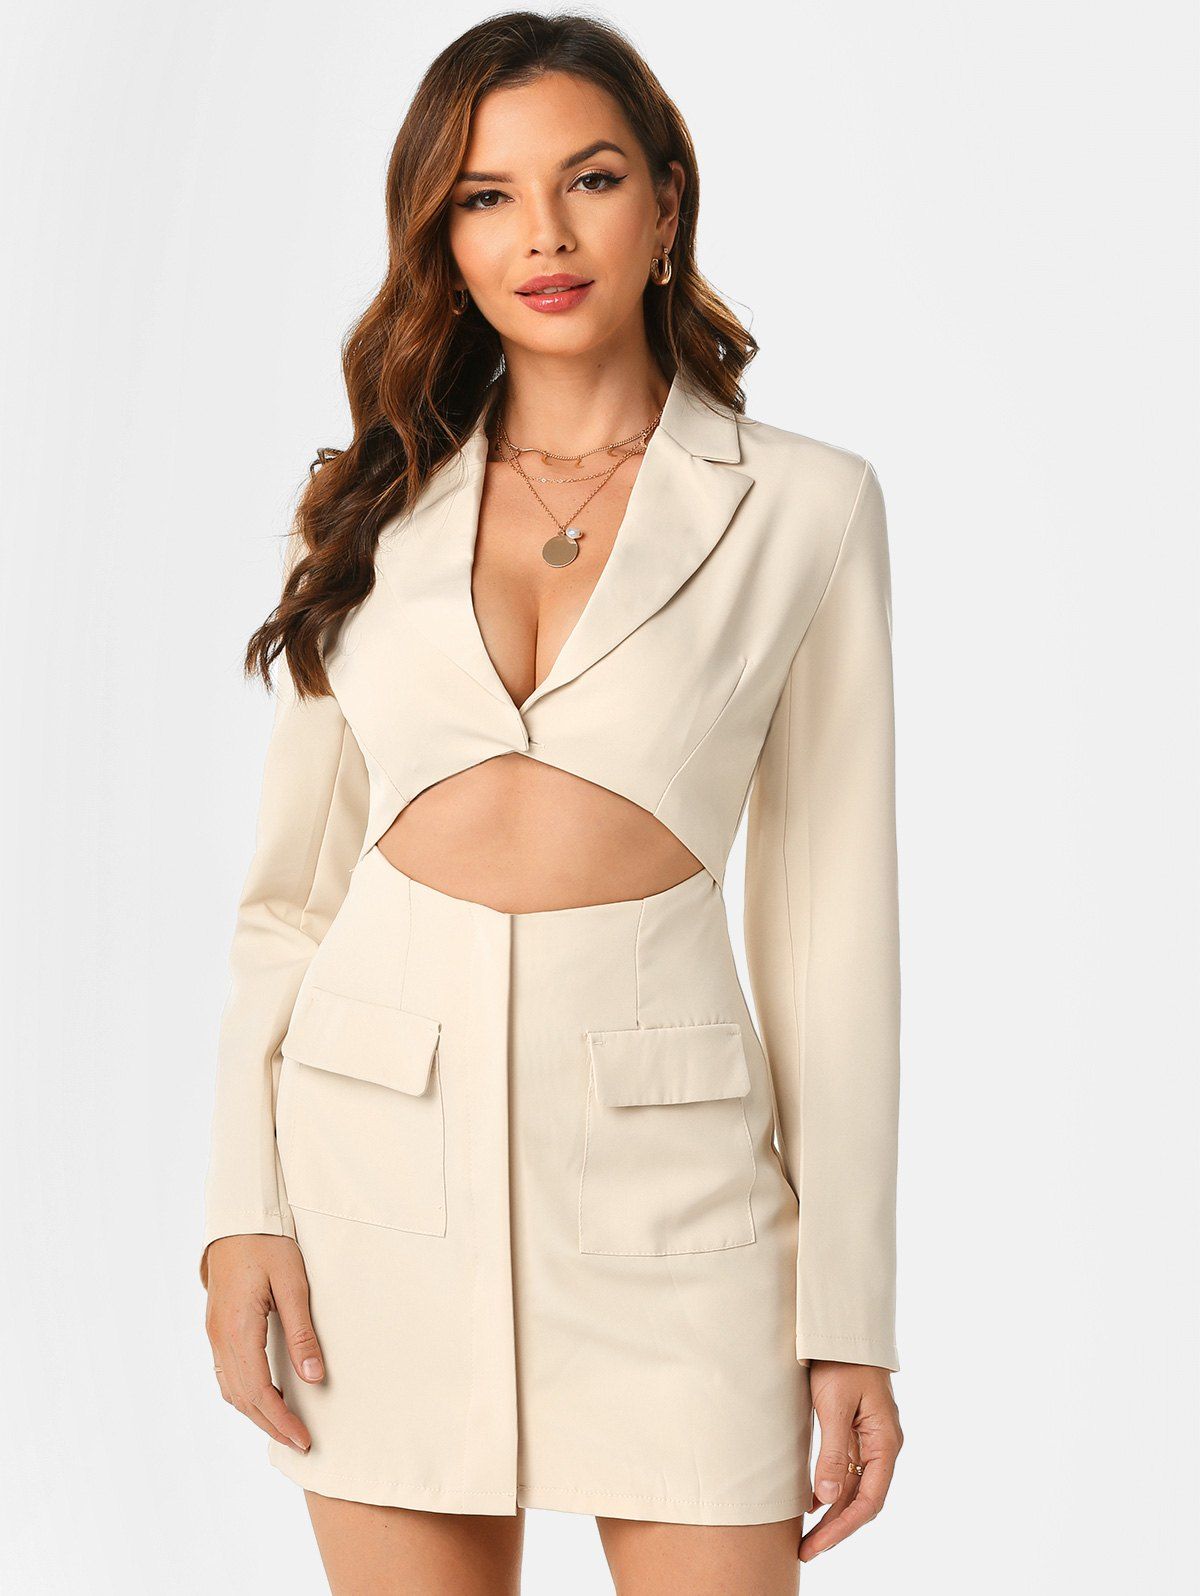 Lapel Cut Out Double Pockets Blazer Dress - WARM WHITE L